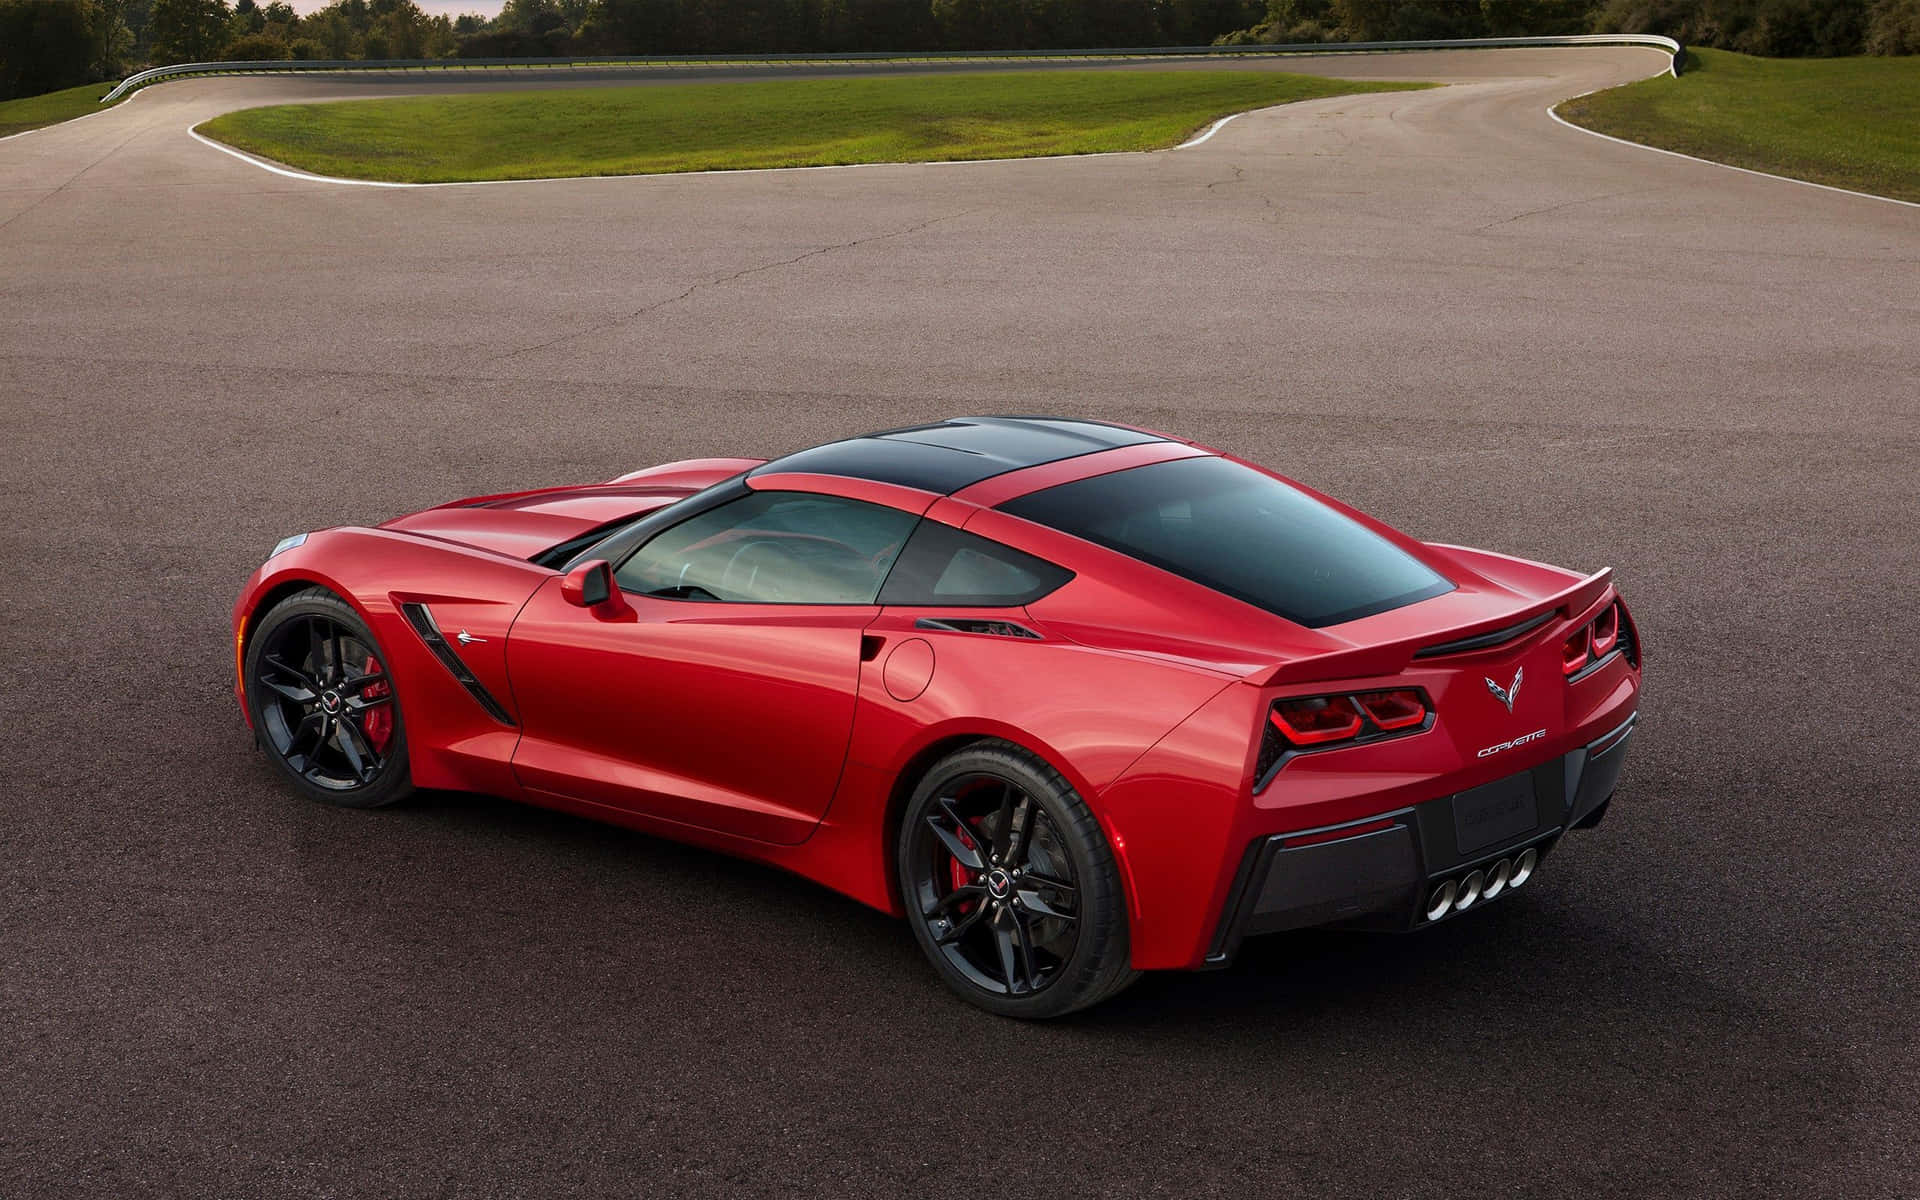 The Iconic Corvette